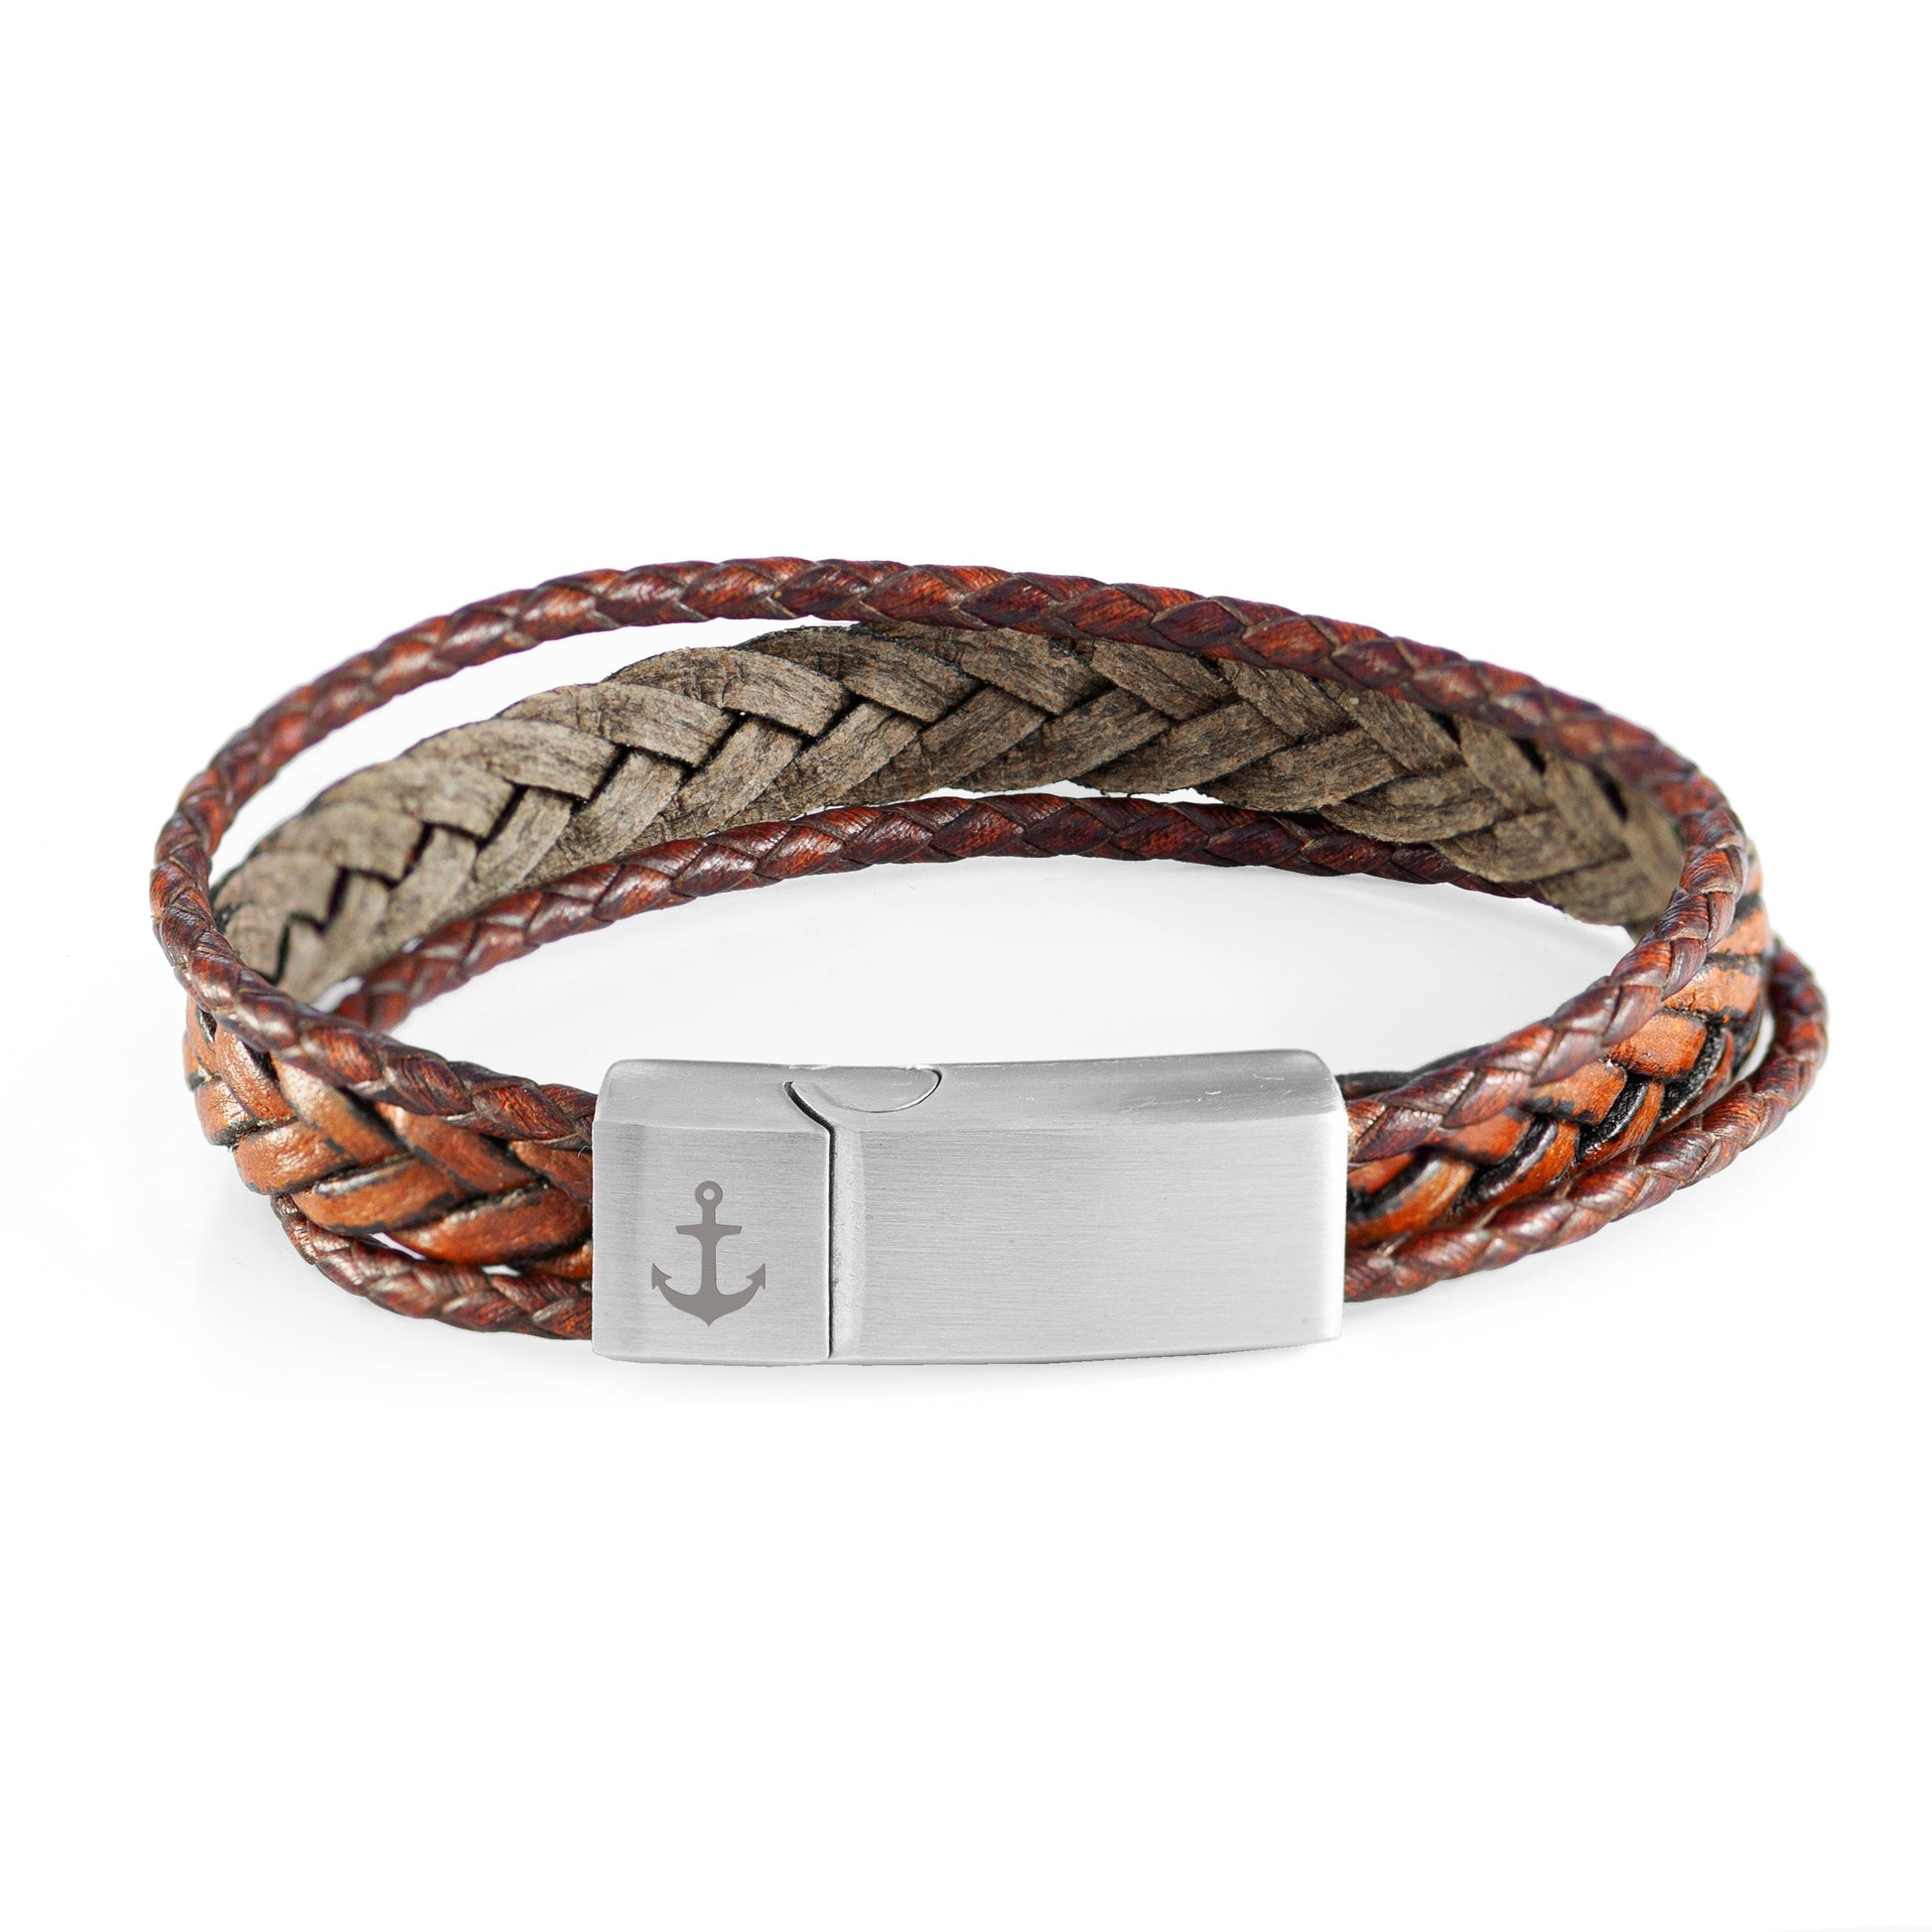 Personalized Men's Bracelets - Personalized Men's Woven Layered Brown Leather Bracelet 